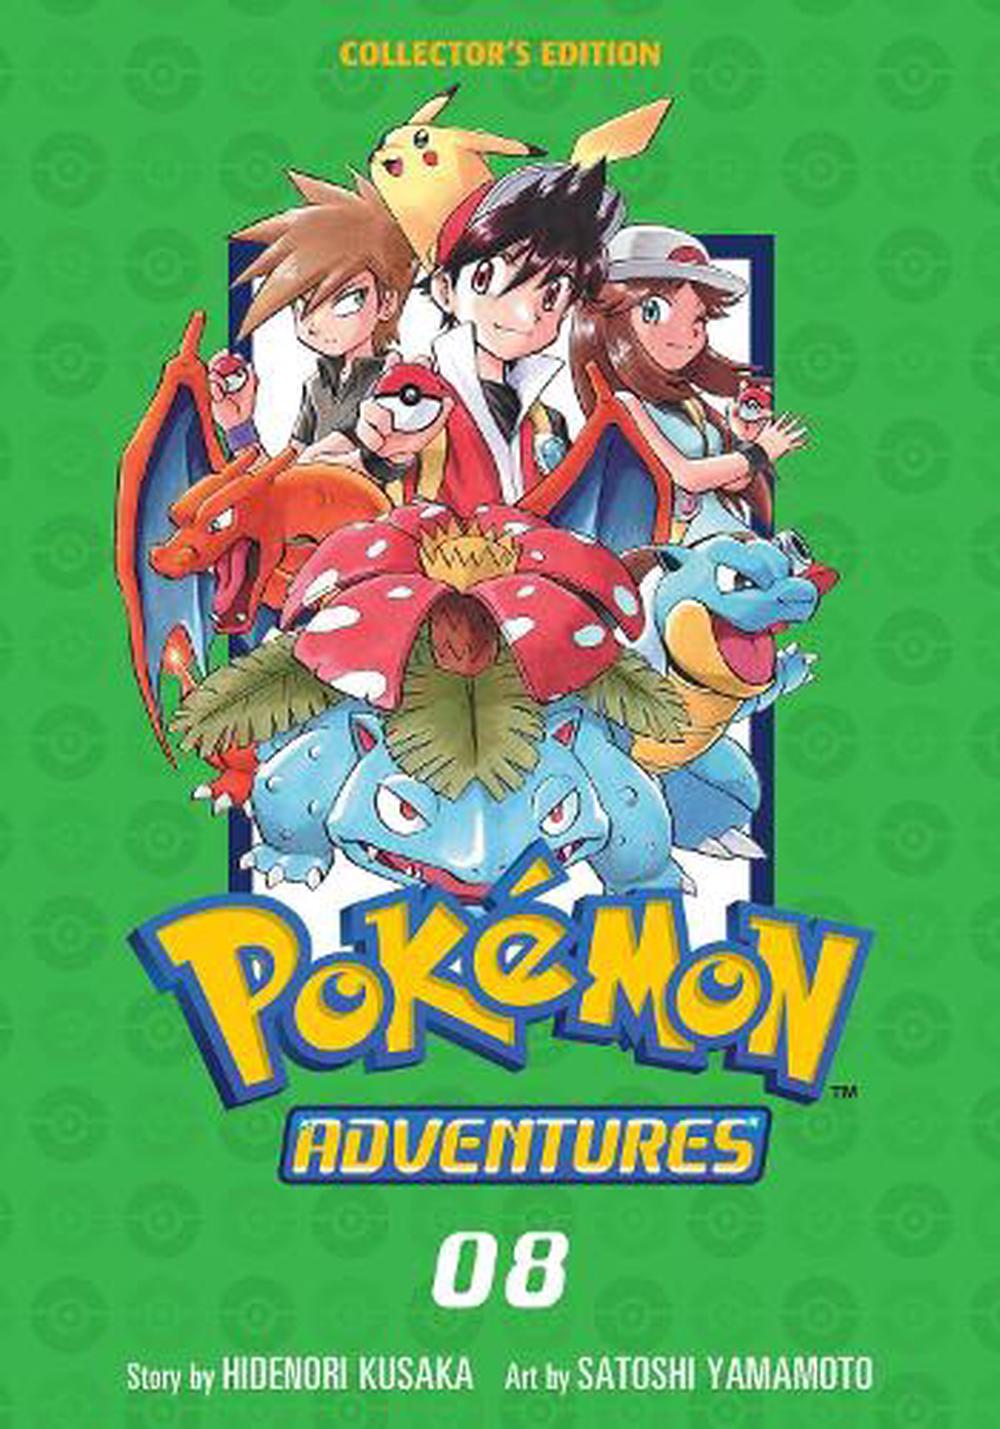 Pokémon: Sword & Shield, Vol. 1  Book by Hidenori Kusaka, Satoshi